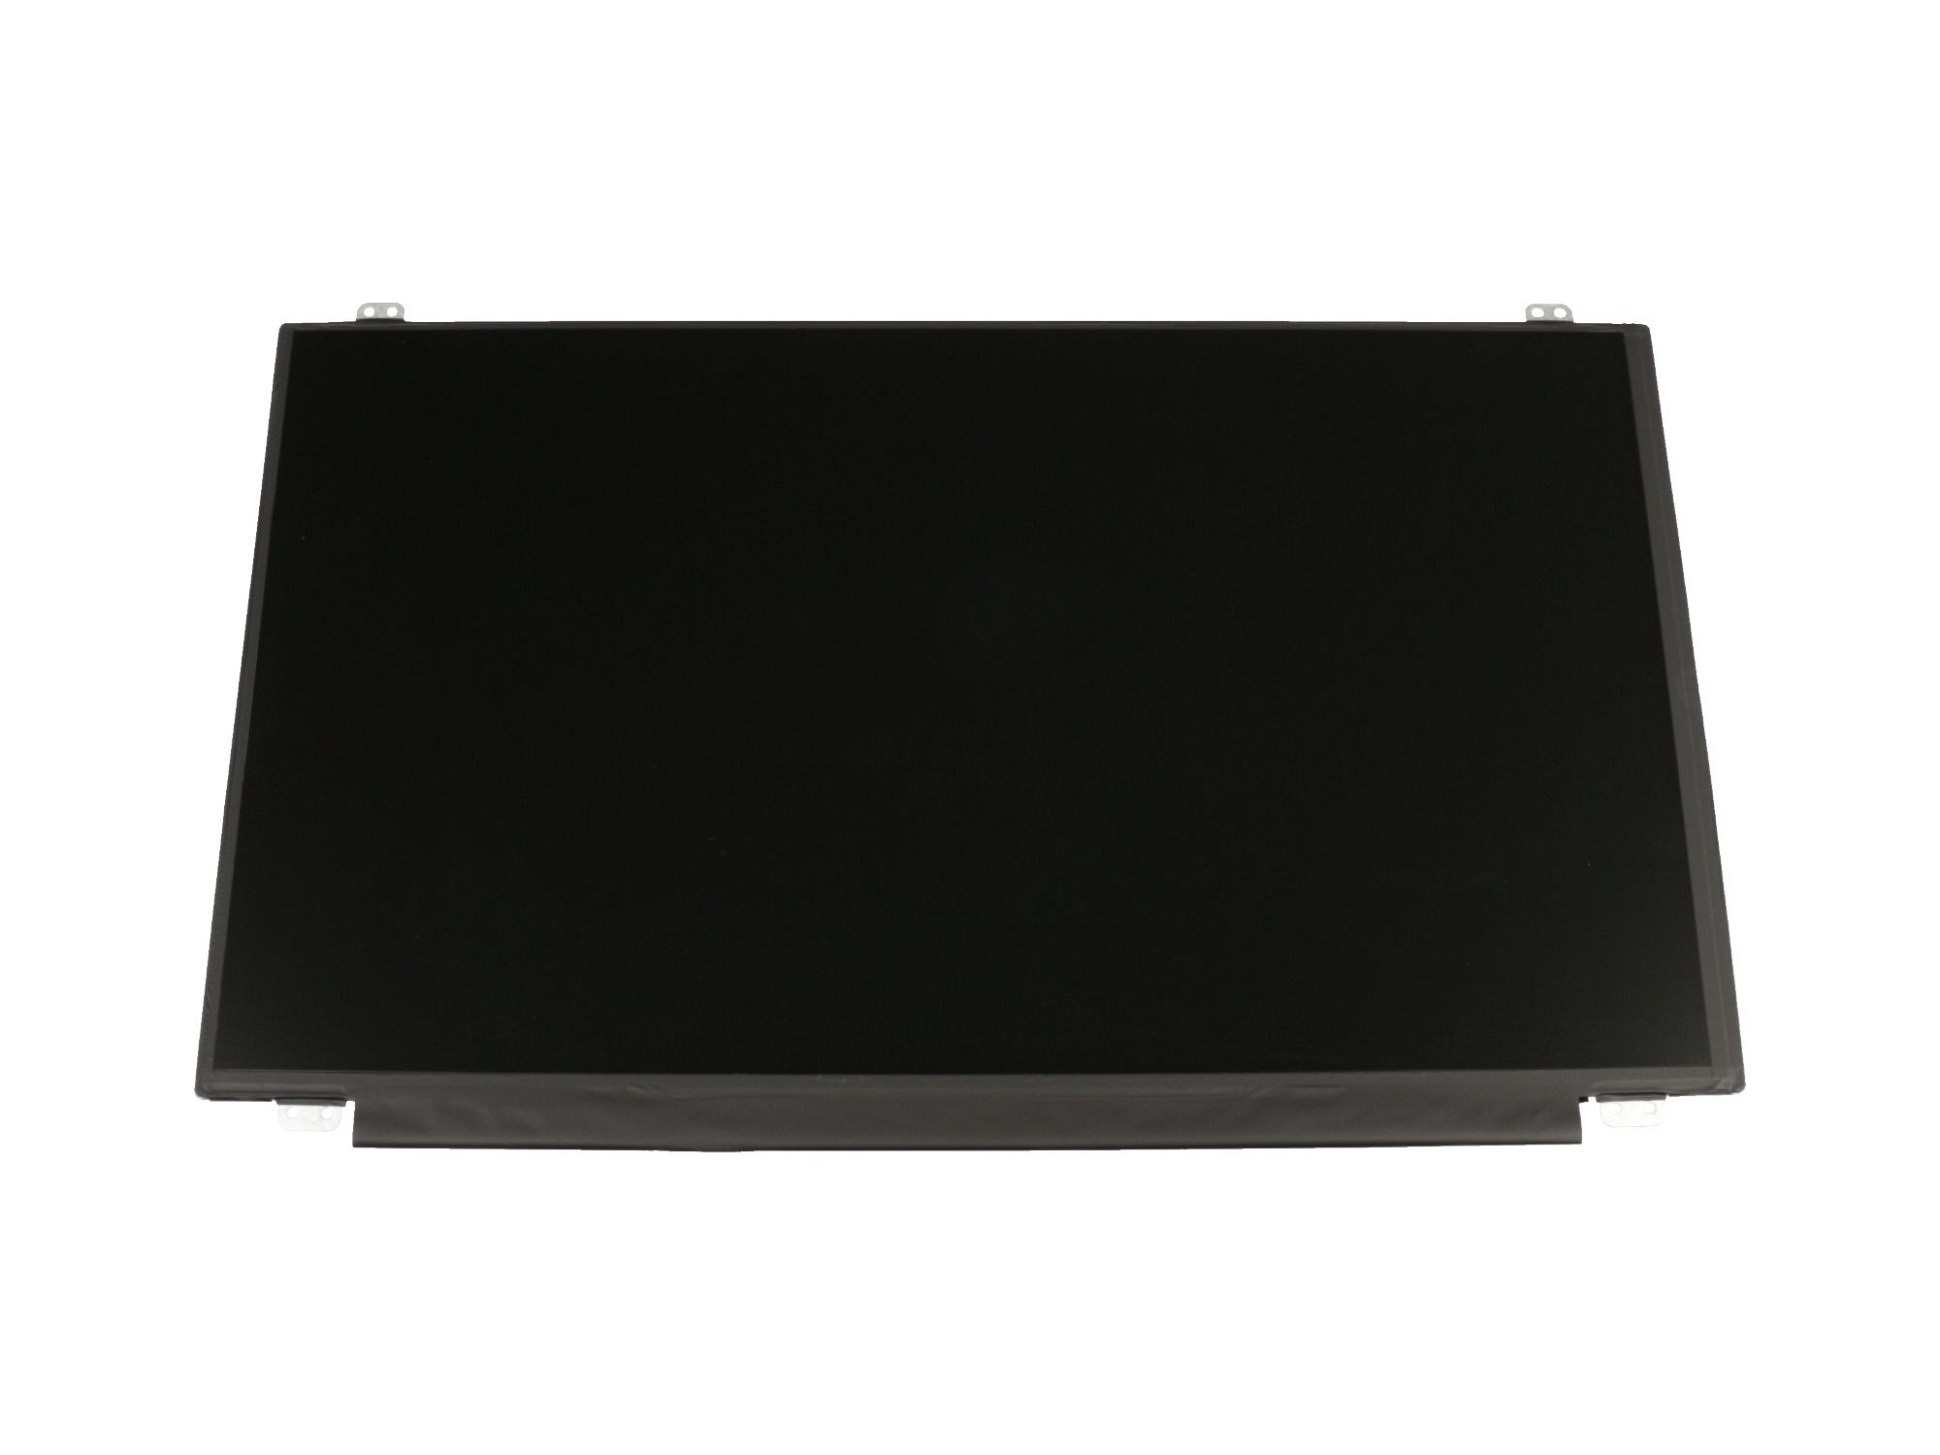 LG LP156WHU-TPBH Display (1366x768) matt slimline